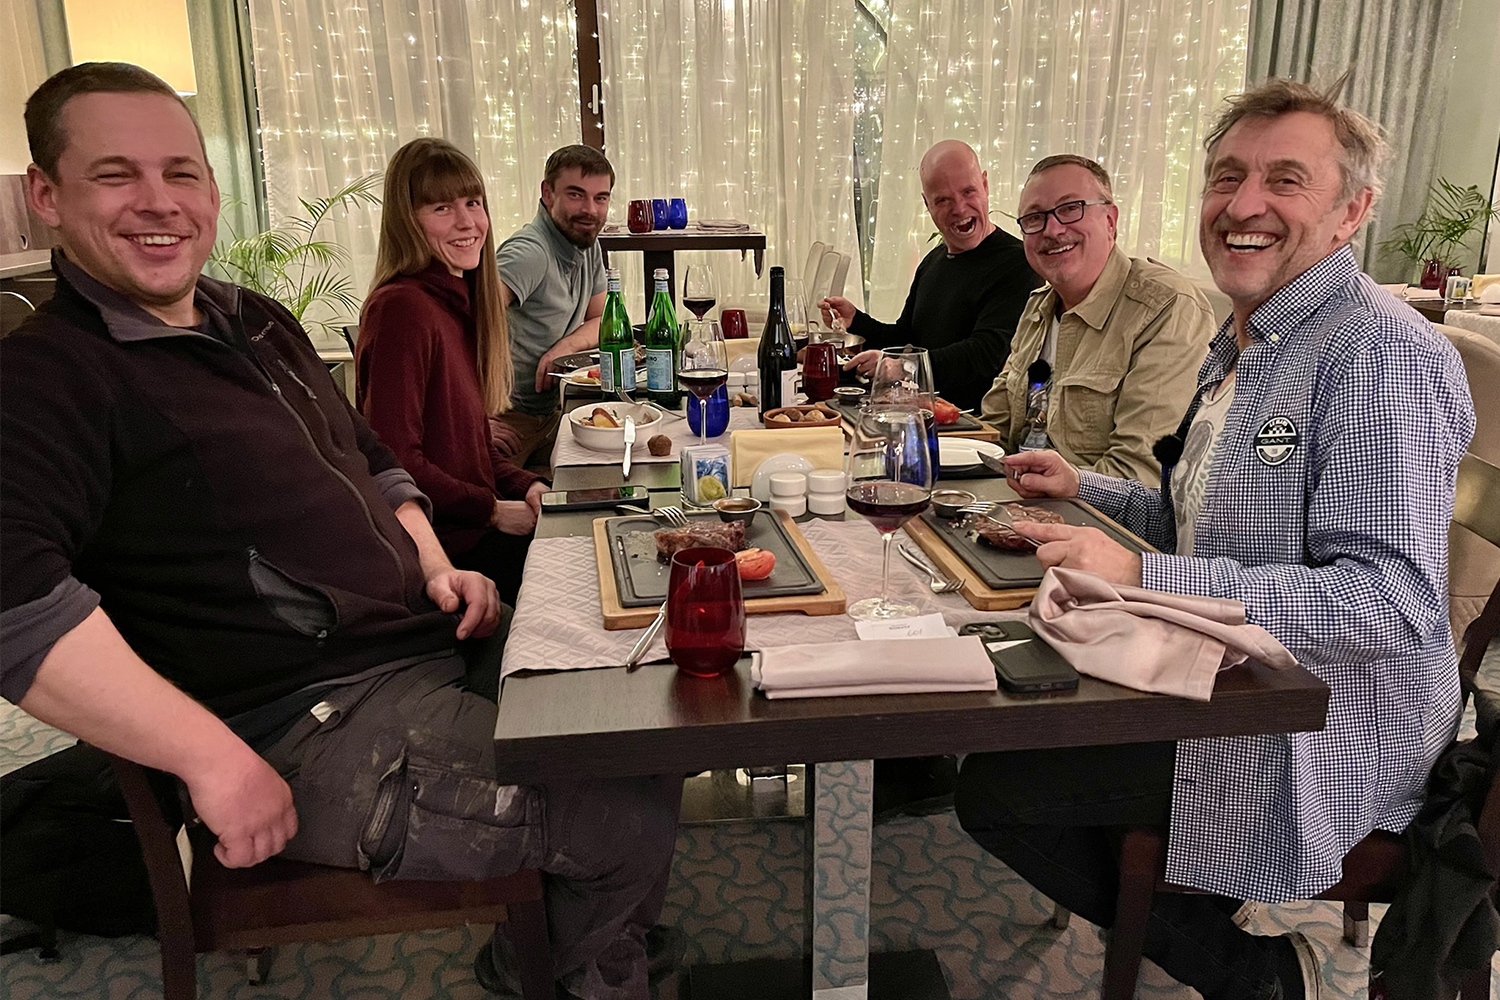 The DefenderX group, including Sofie Rørdam, Misha Vikhrov, Mikael Strandberg, Jeff Willner and Steve Brooks, sit down for dinner in Russia